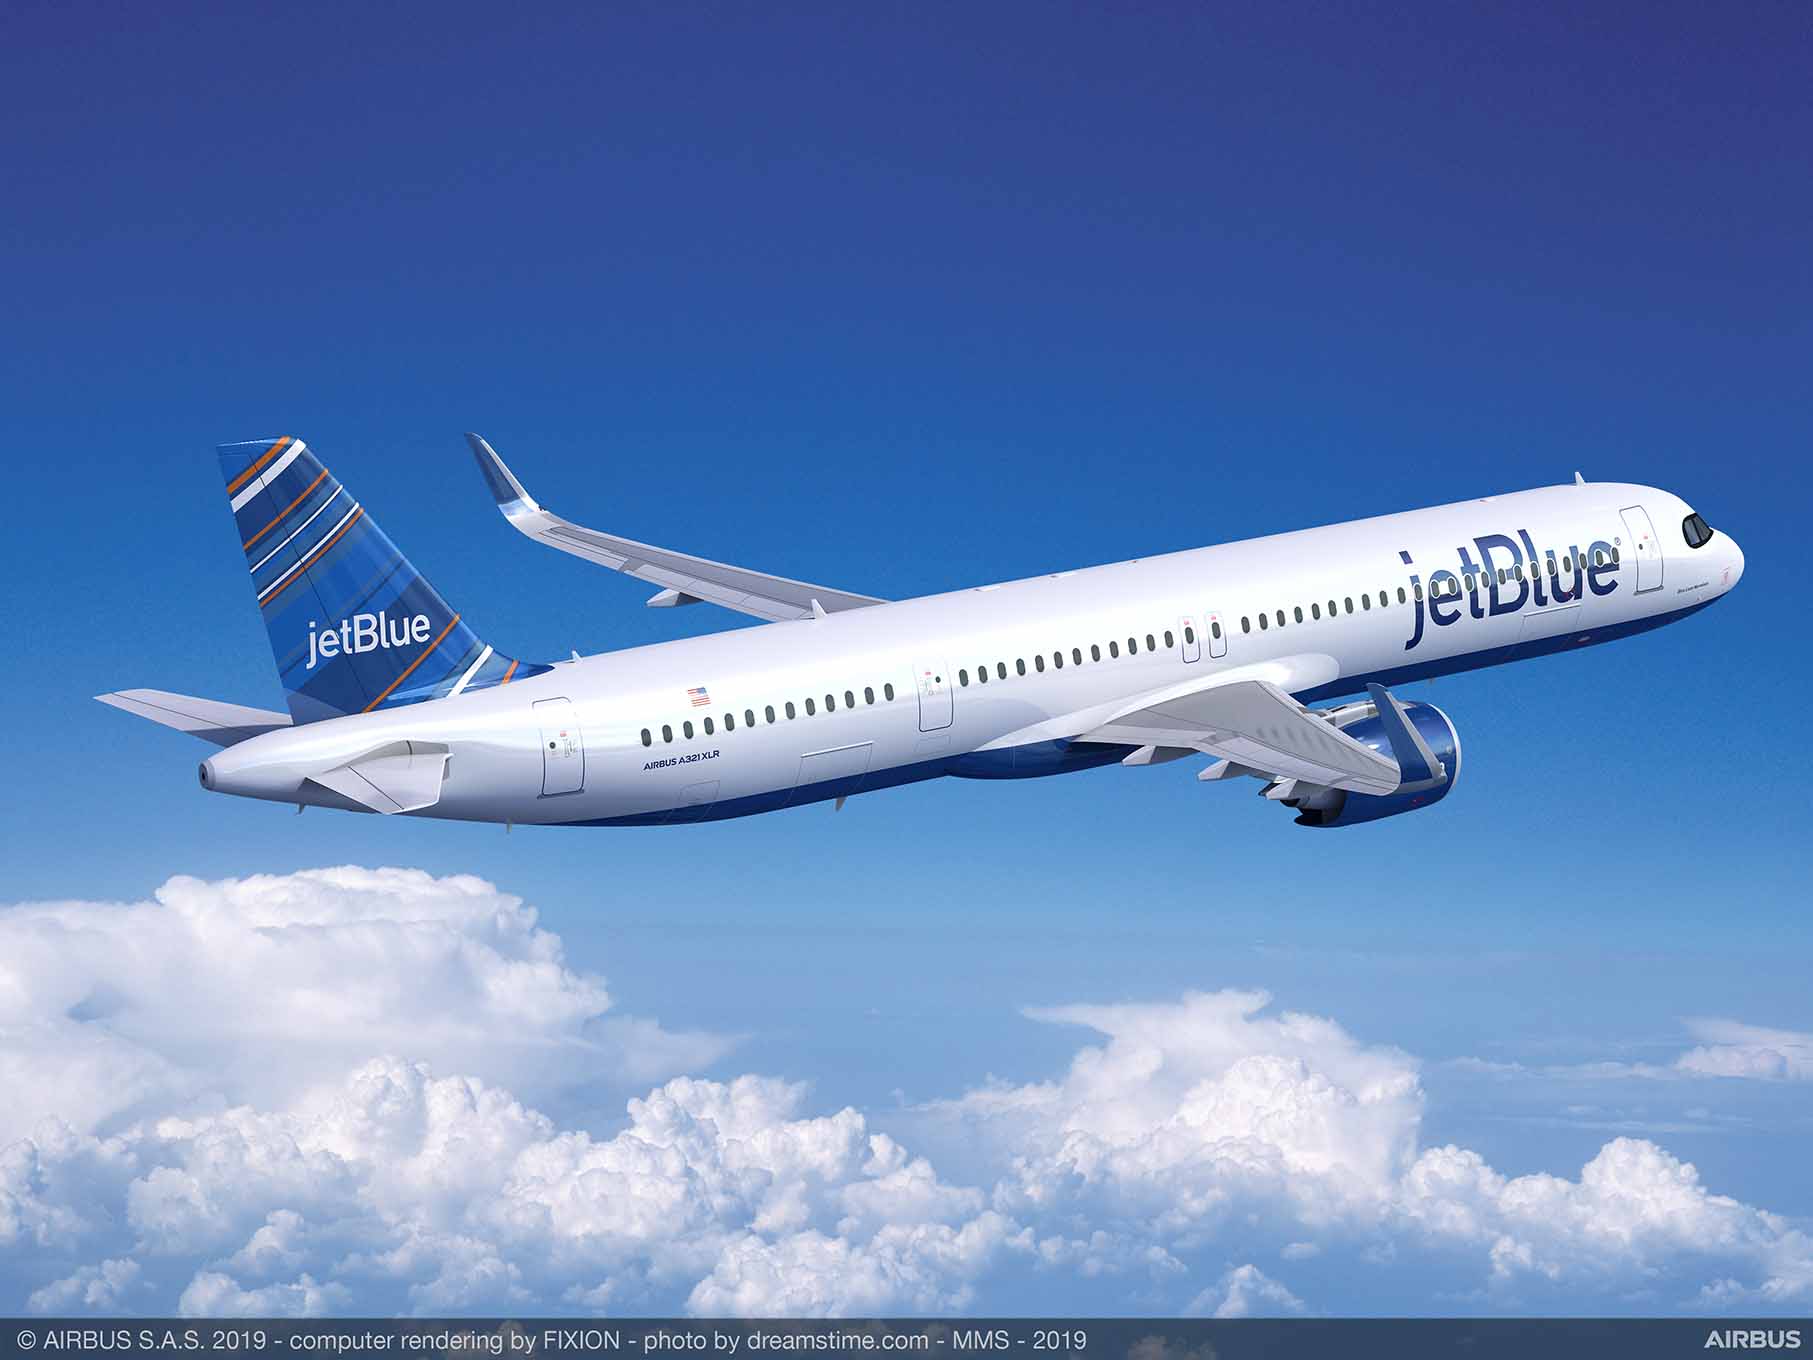 JetBlue to introduce nonstop service between JFK and Guyana’s Cheddi Jagan International Airport